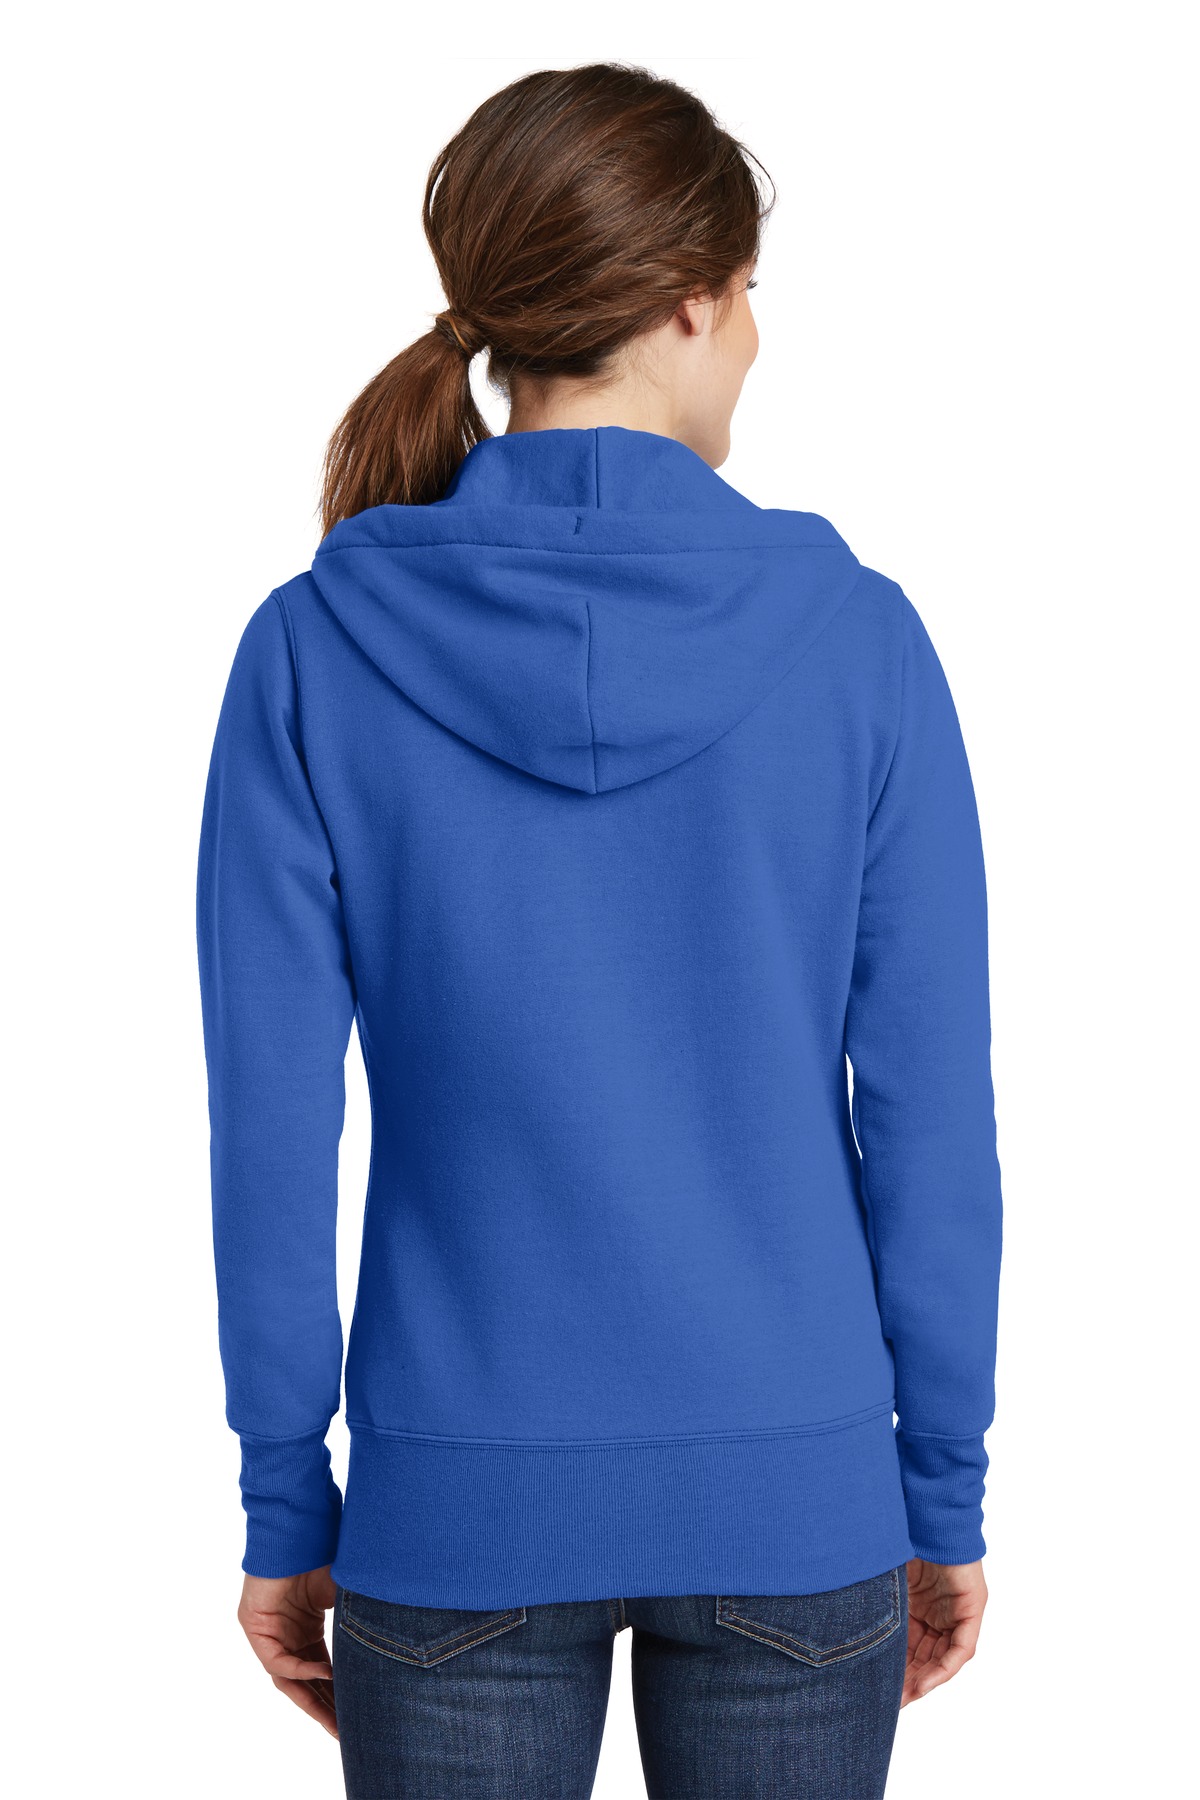 Port & Company Classic Full Zip Hooded Sweatshirt (LPC78ZH) Royal Blue, XL - image 2 of 2